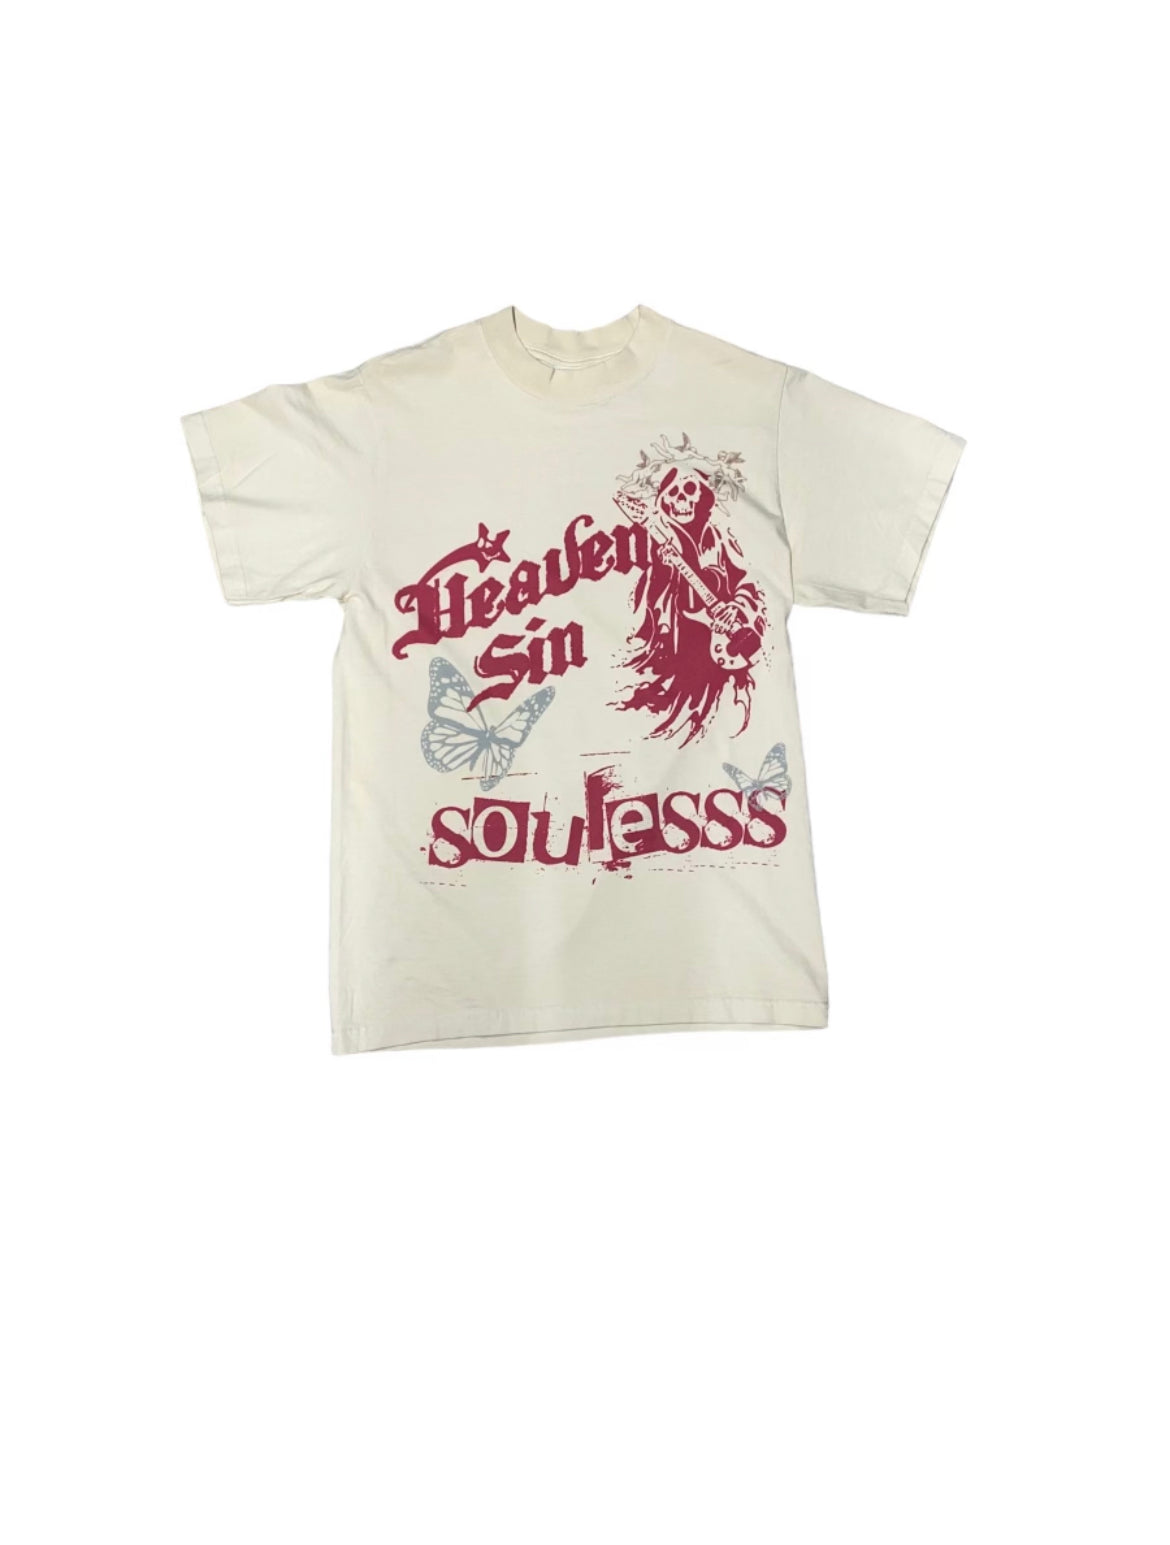 soulesss t-shirt